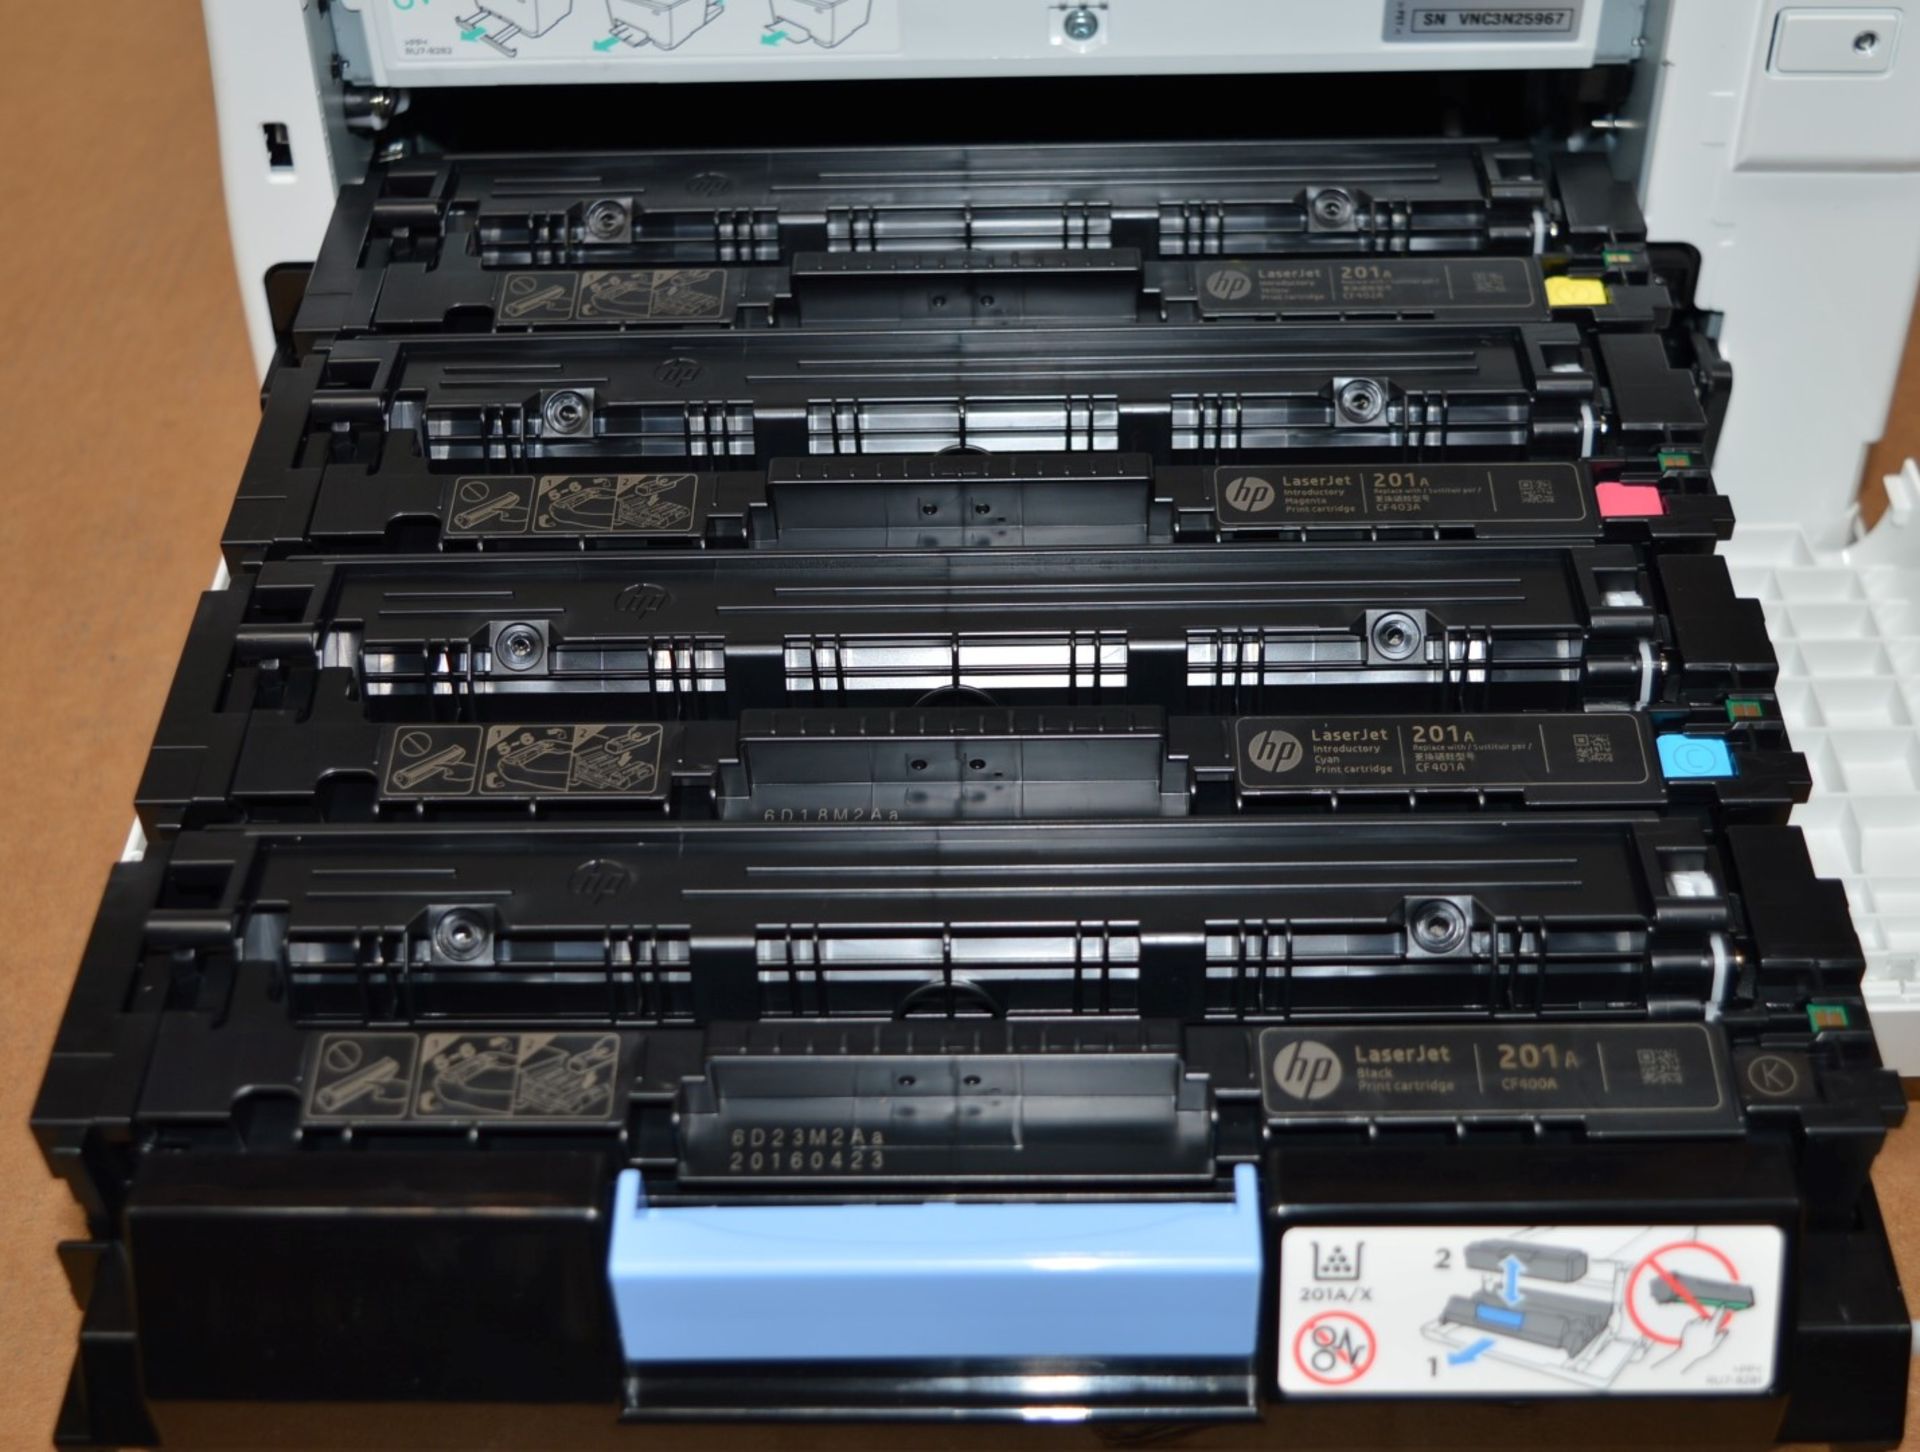 1 x HP LaserJet Pro M252dw Colour Laser Printer - CL010 - Ref IT467 - Includes Full Set of - Image 2 of 11